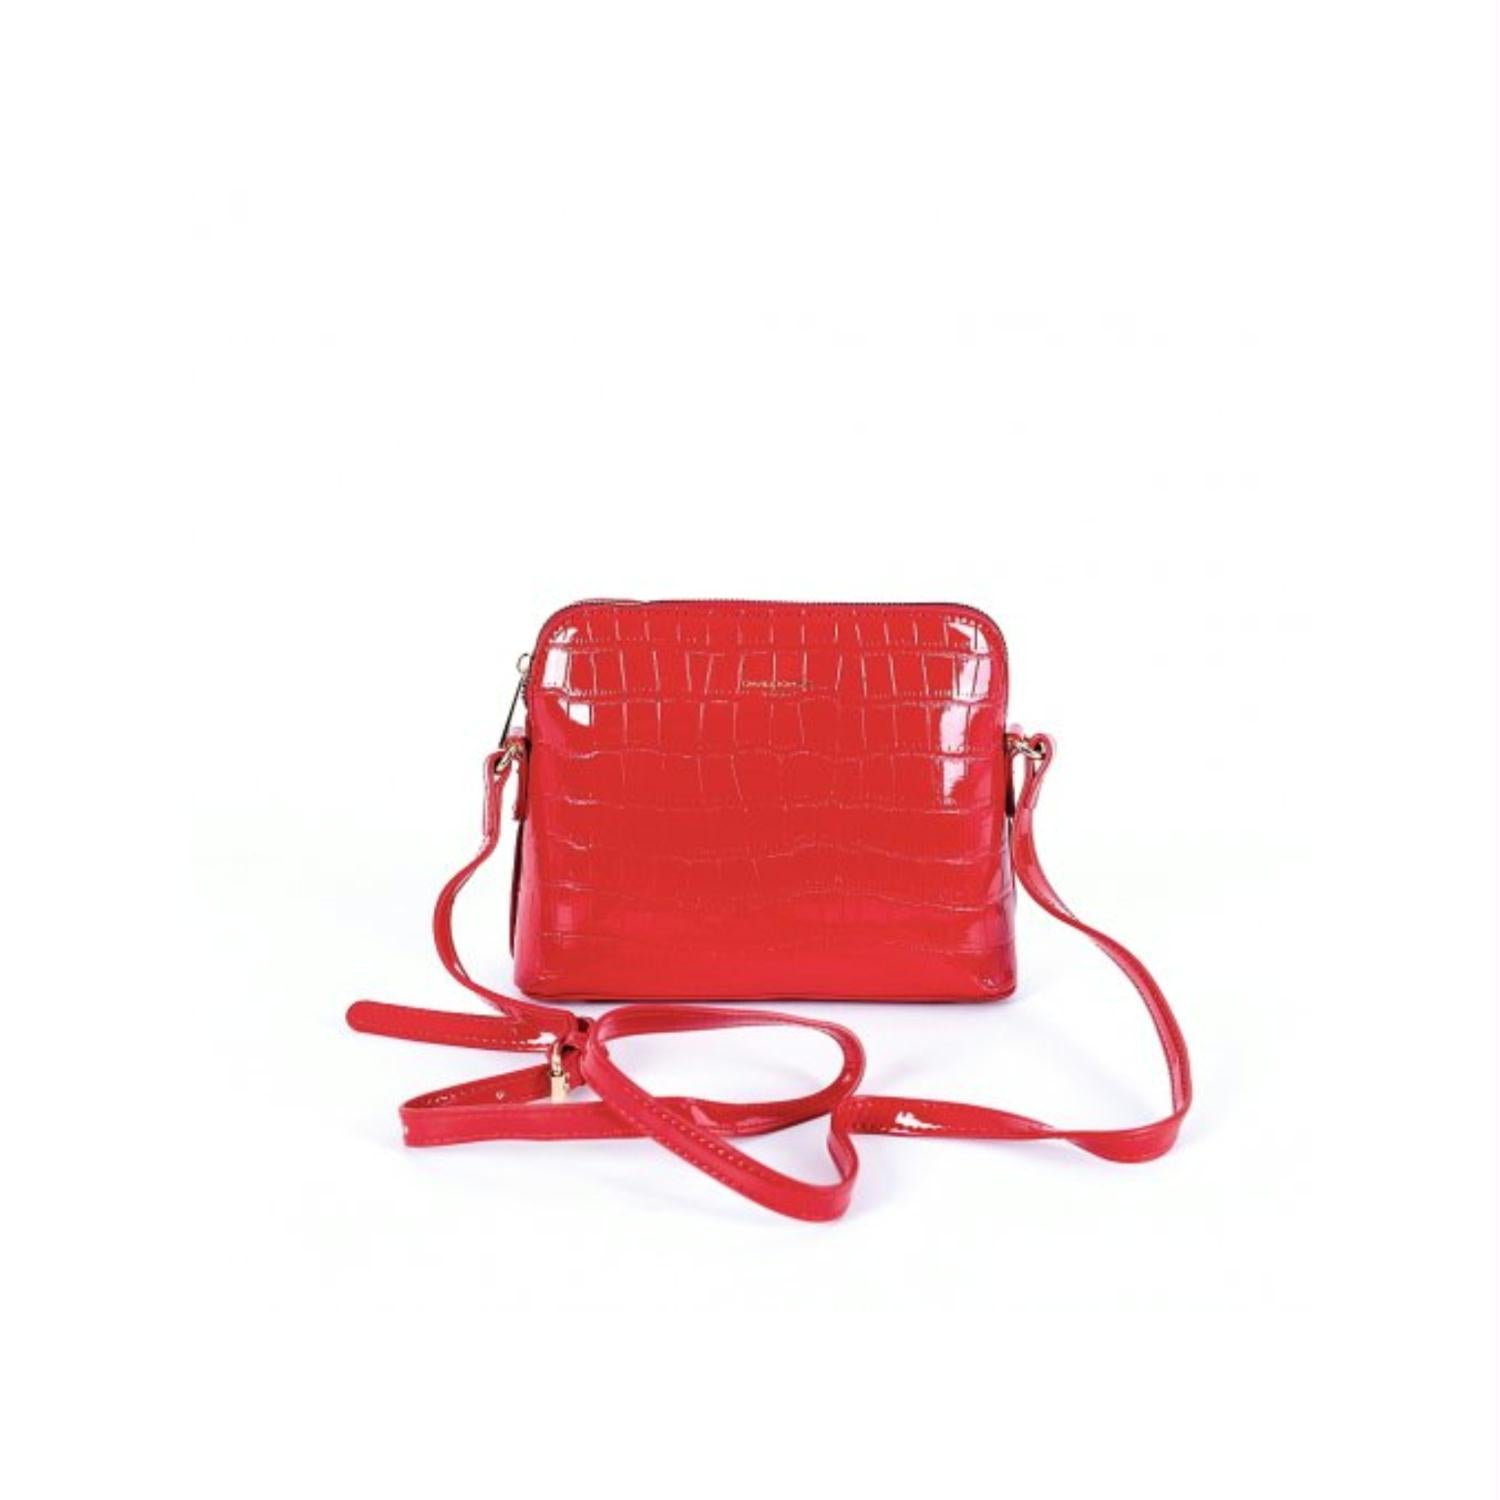 Handbag in an animal motif 6916-1 23WL DAVID JONES